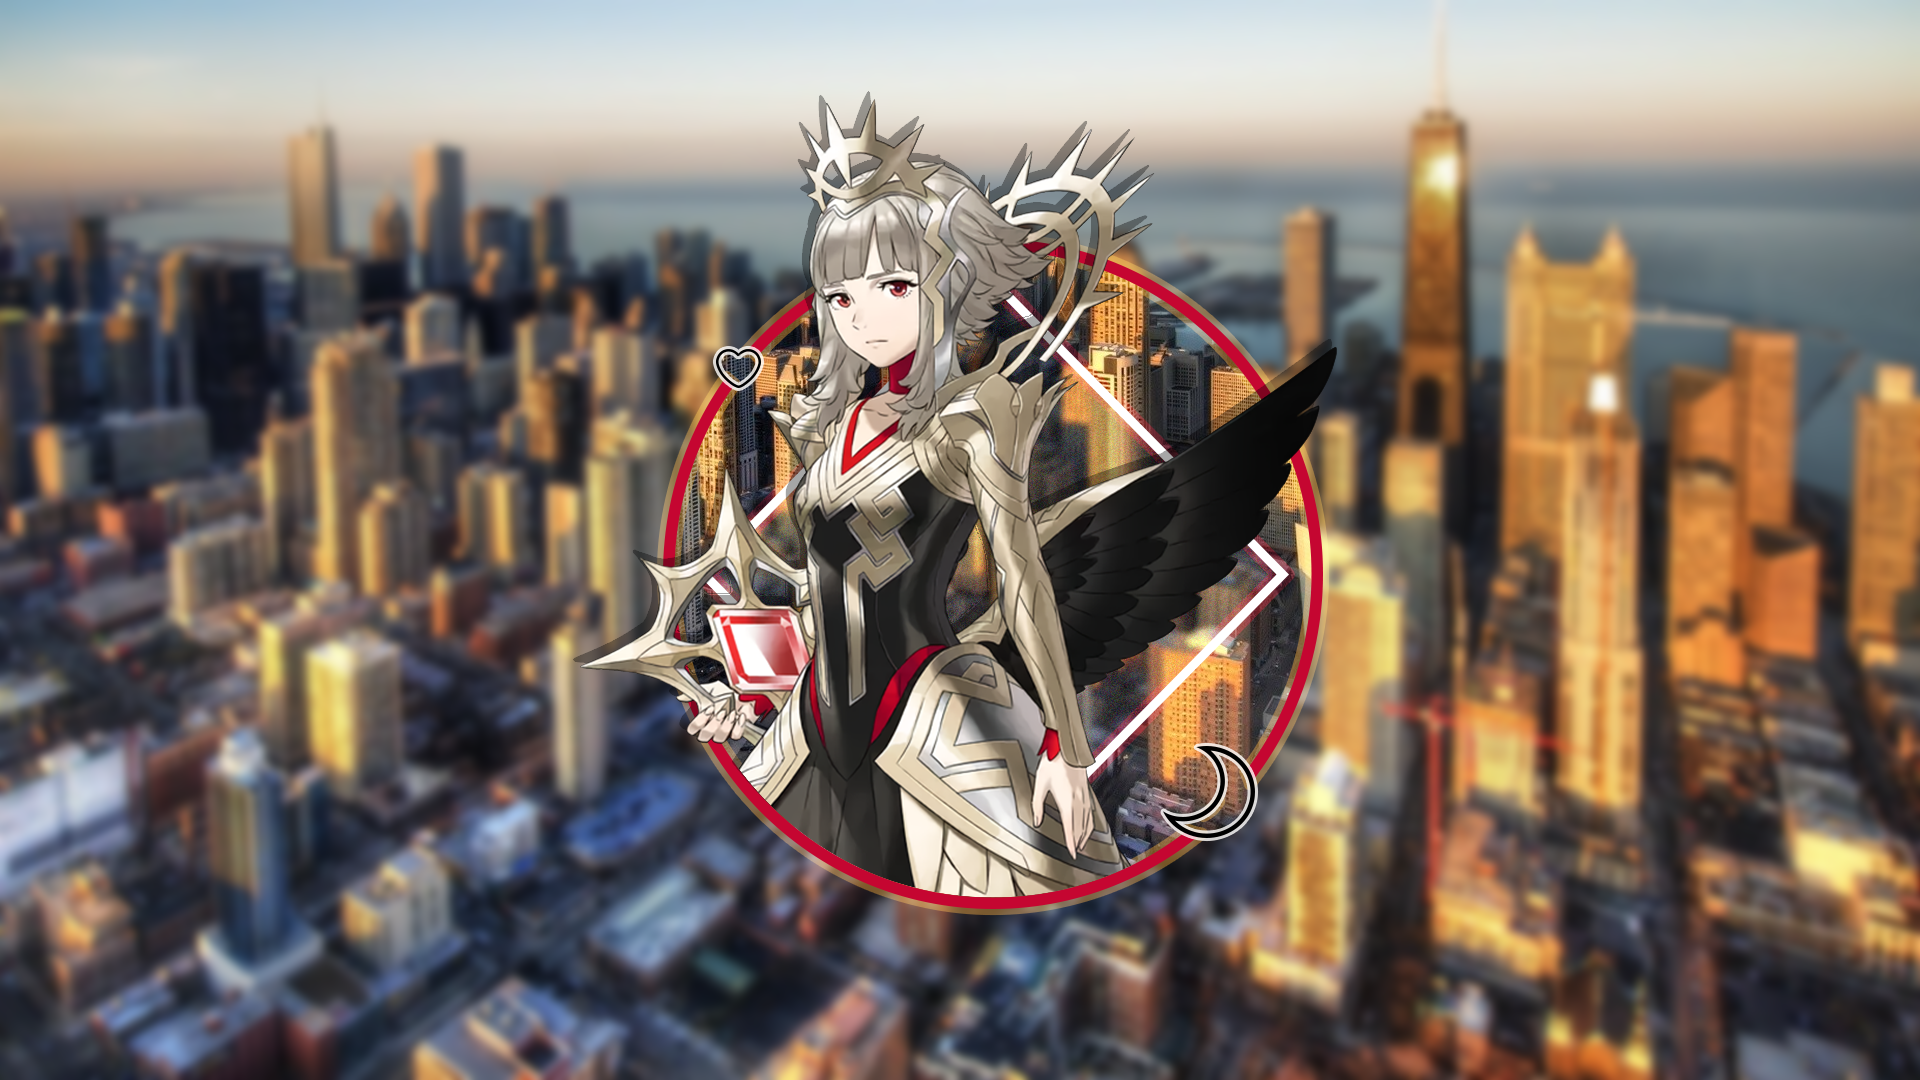 Picture In Picture Anime Girls Fire Emblem Urban New York City Skyscraper Sunrise Cityscape City 1920x1080